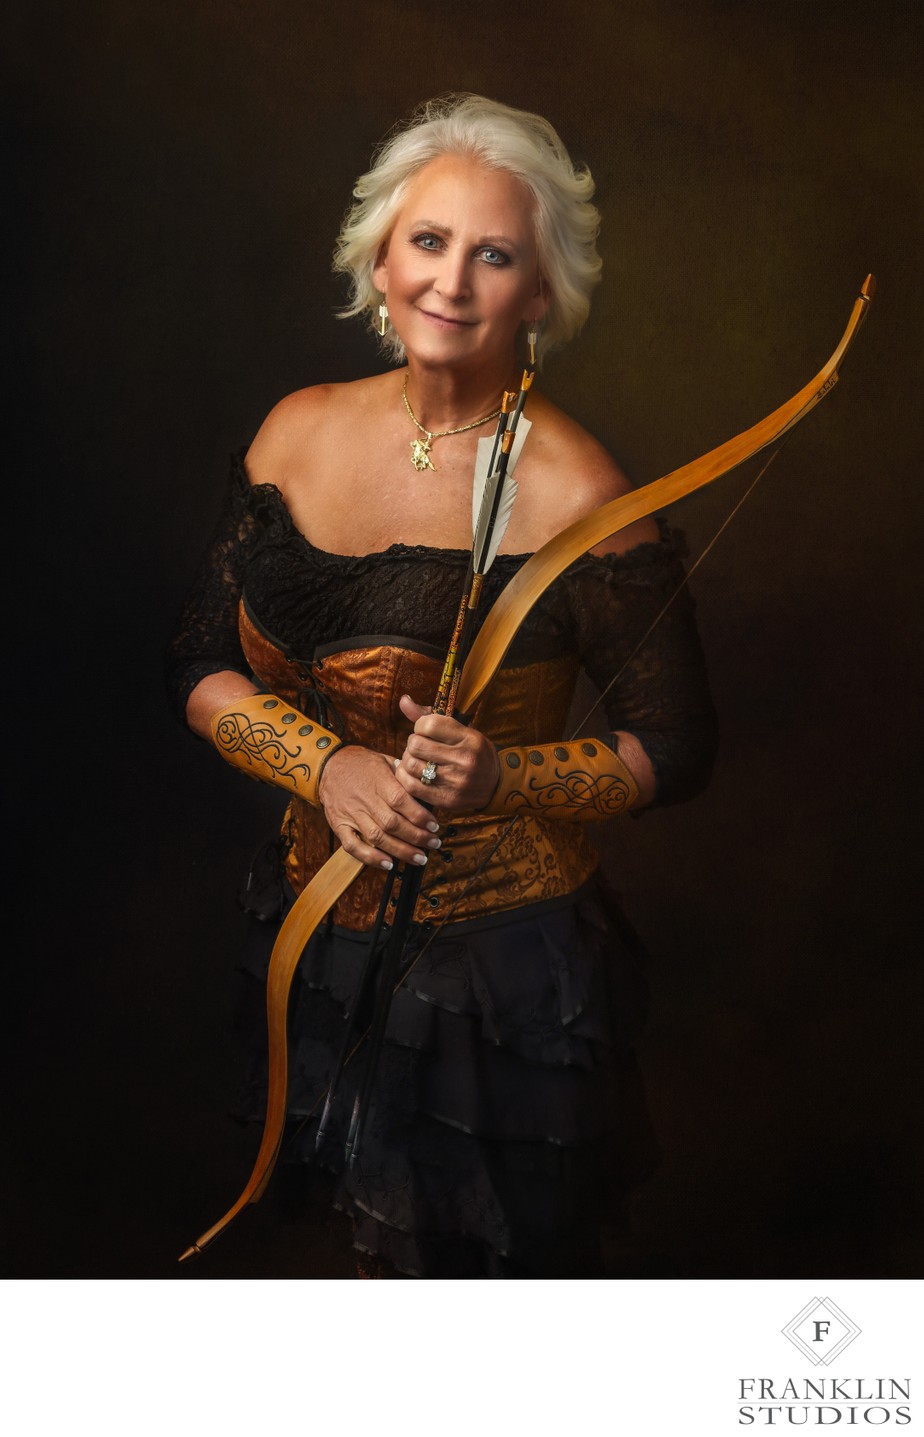 Portrait of an Archer, Woman Over 50